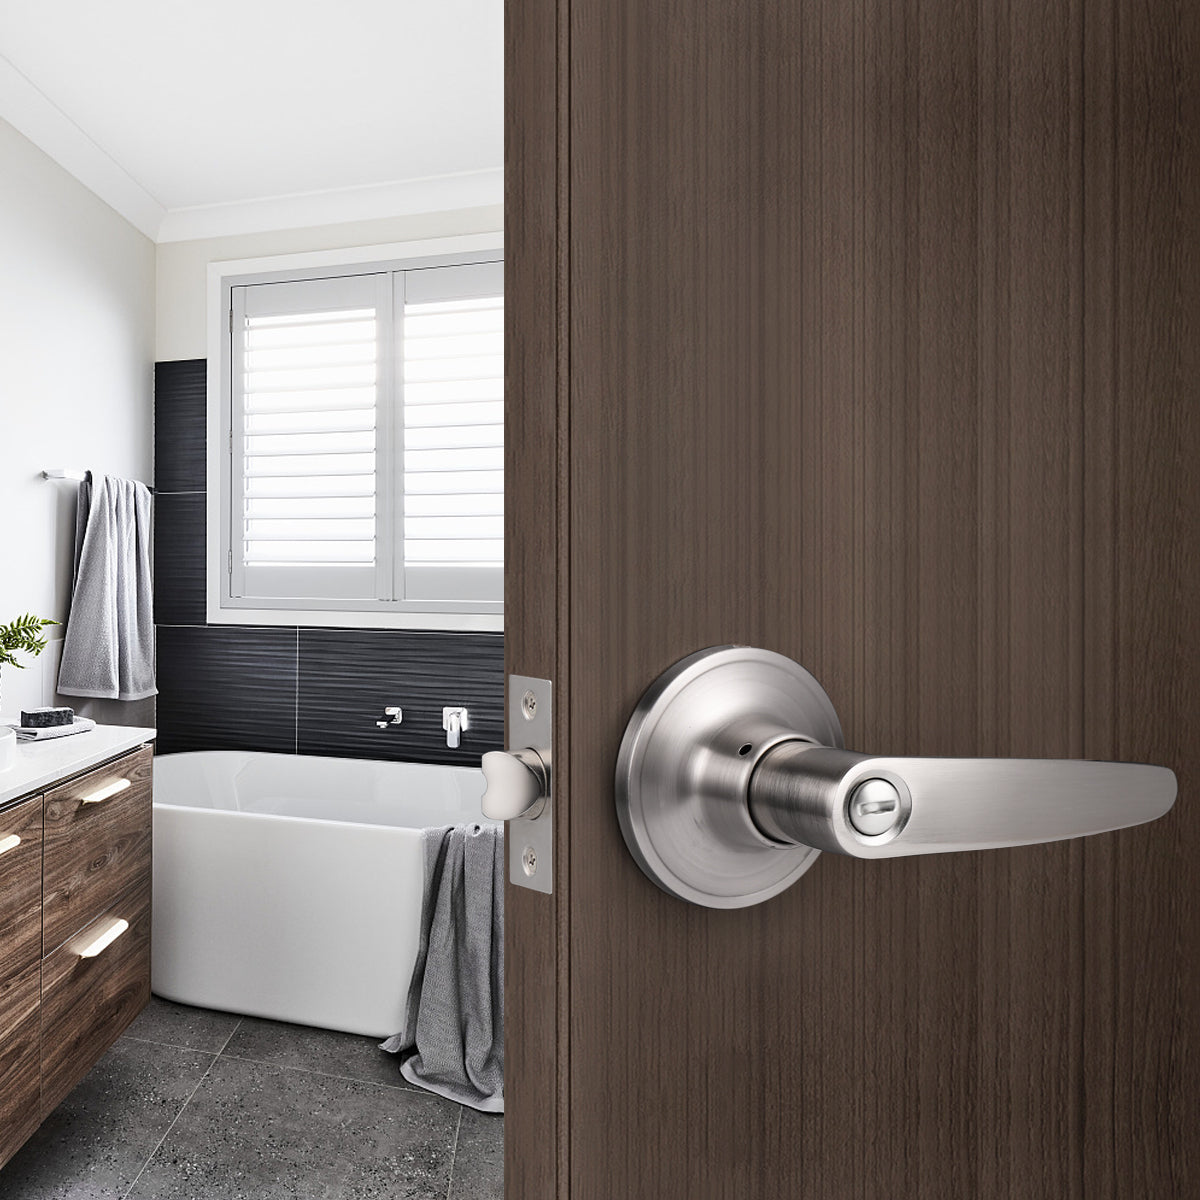 Leaf Style Door Lever, Satin Nickel Finish Bed/Bathroom Privacy Door Lock DL815SNBK